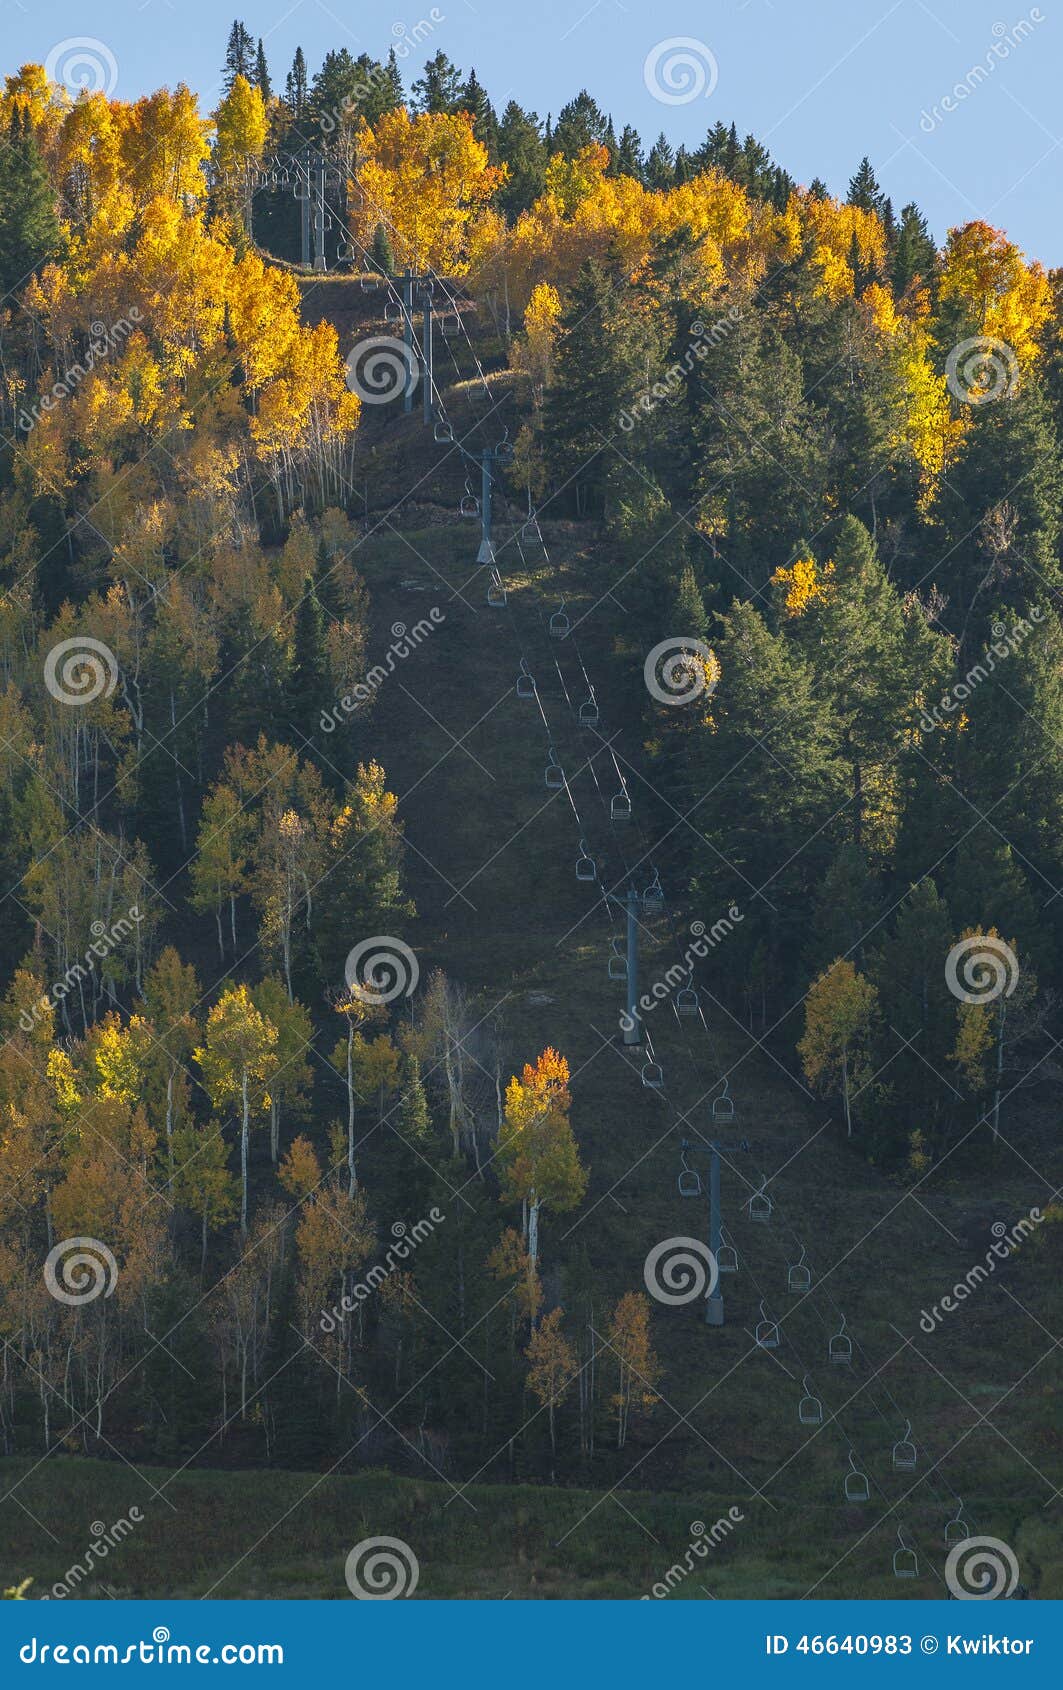 Aspen Ski Lift stockbild. Bild von rockies, frühling - 46640983